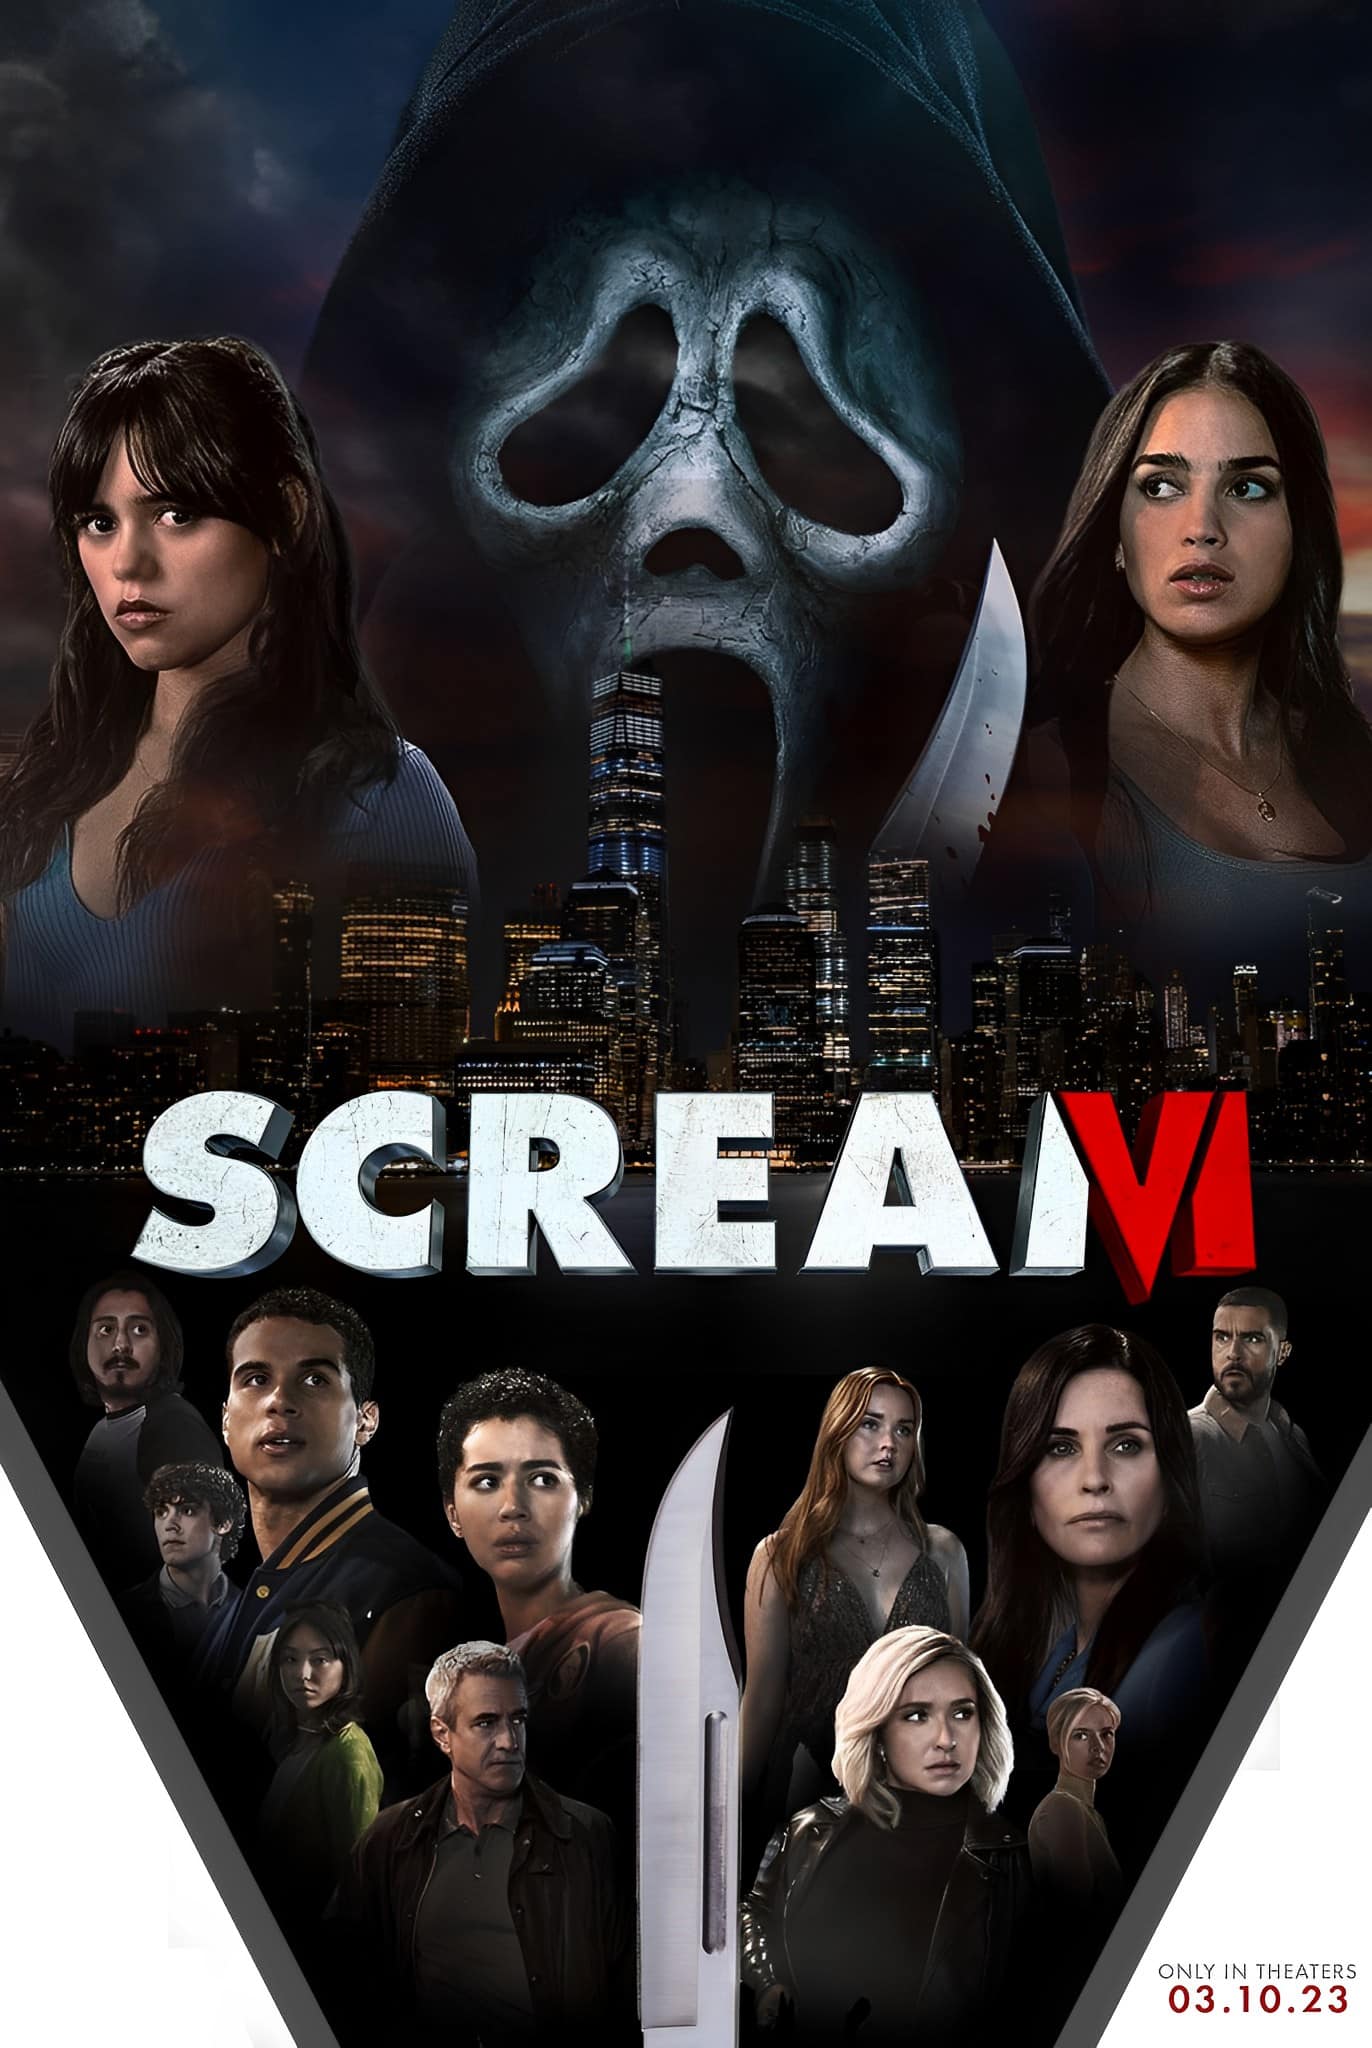 Scream VI – Official Poster: Remake